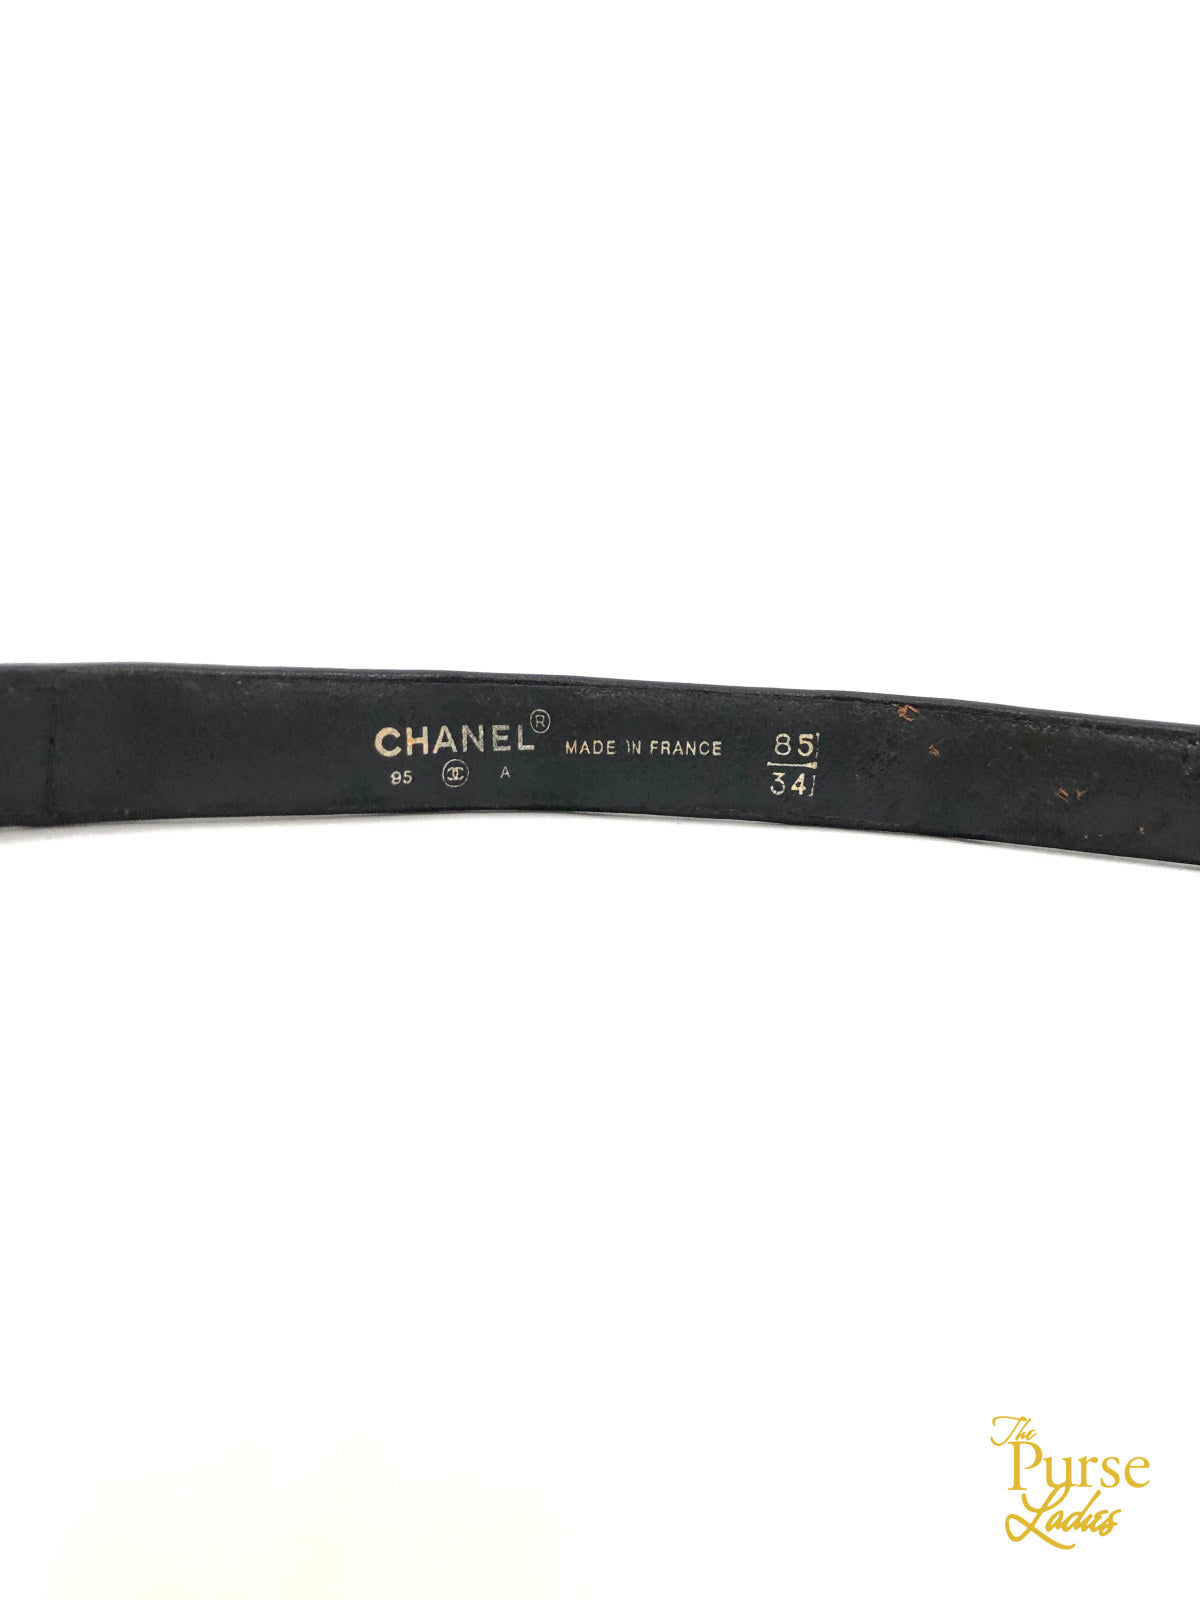 CHANEL Black Leather Vintage Icon 1995 Buckle Waist Belt Sz 85/34